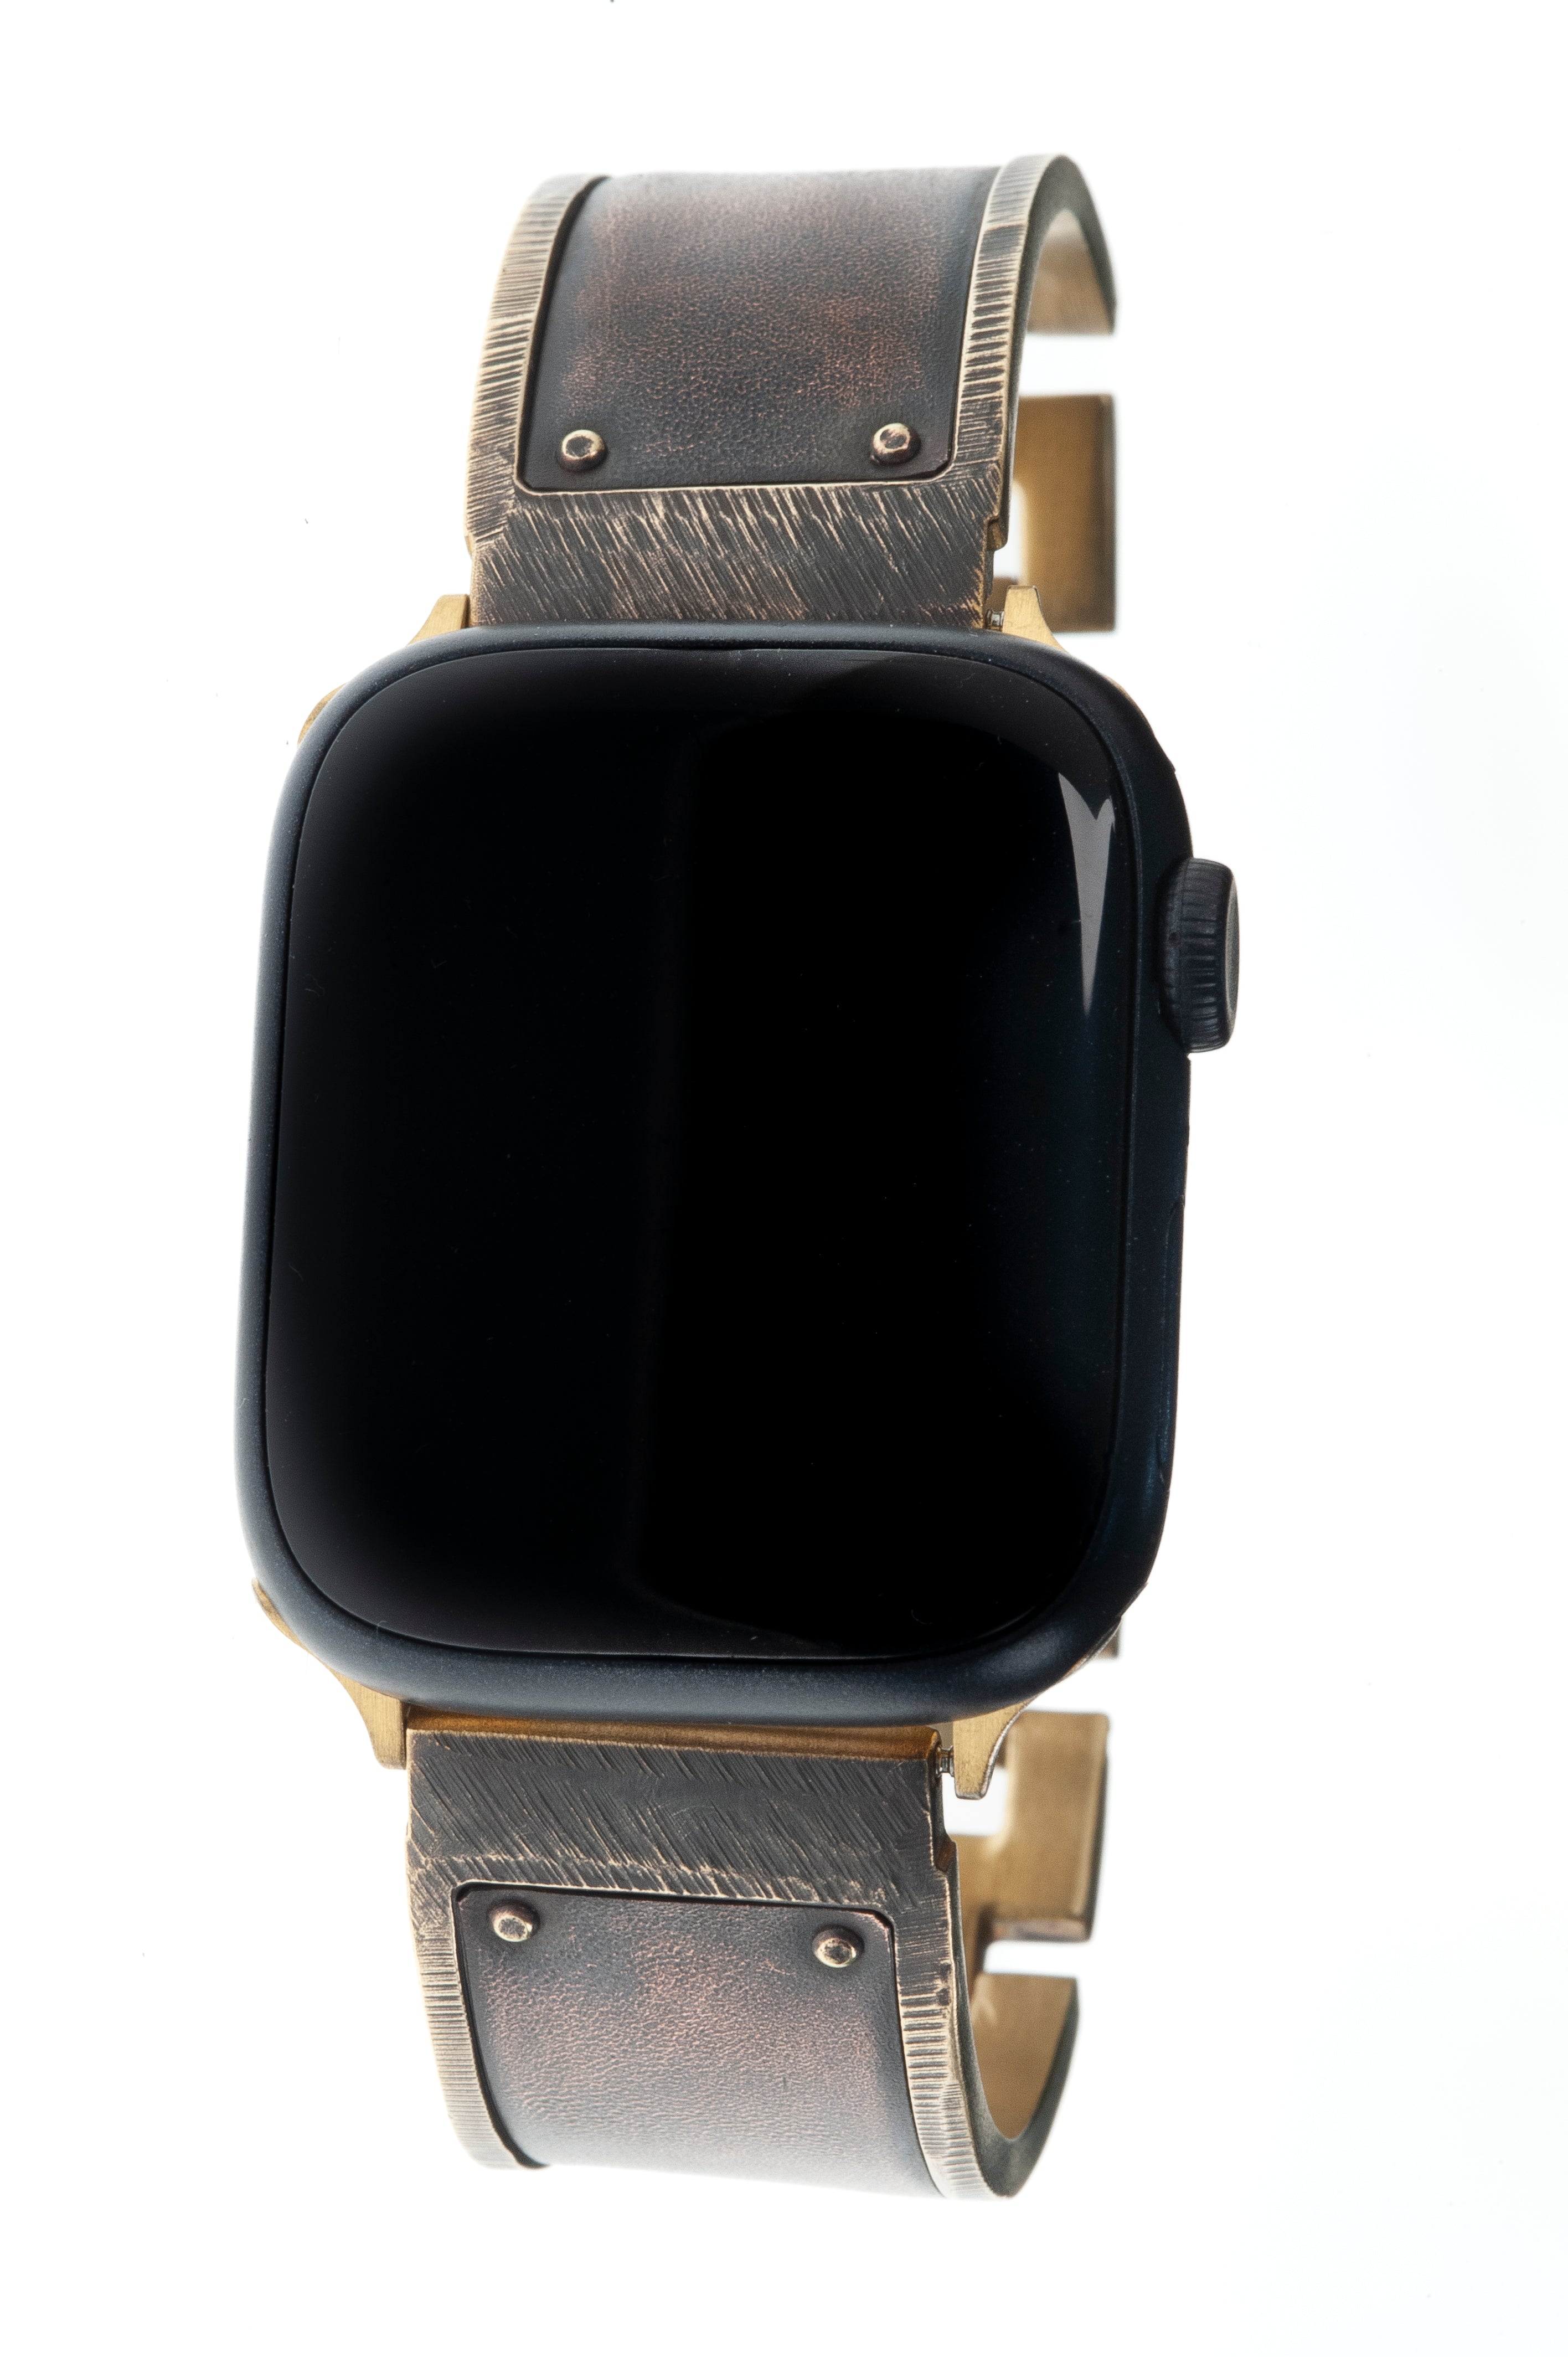 Apple Watch Band in Dark Copper - Wide